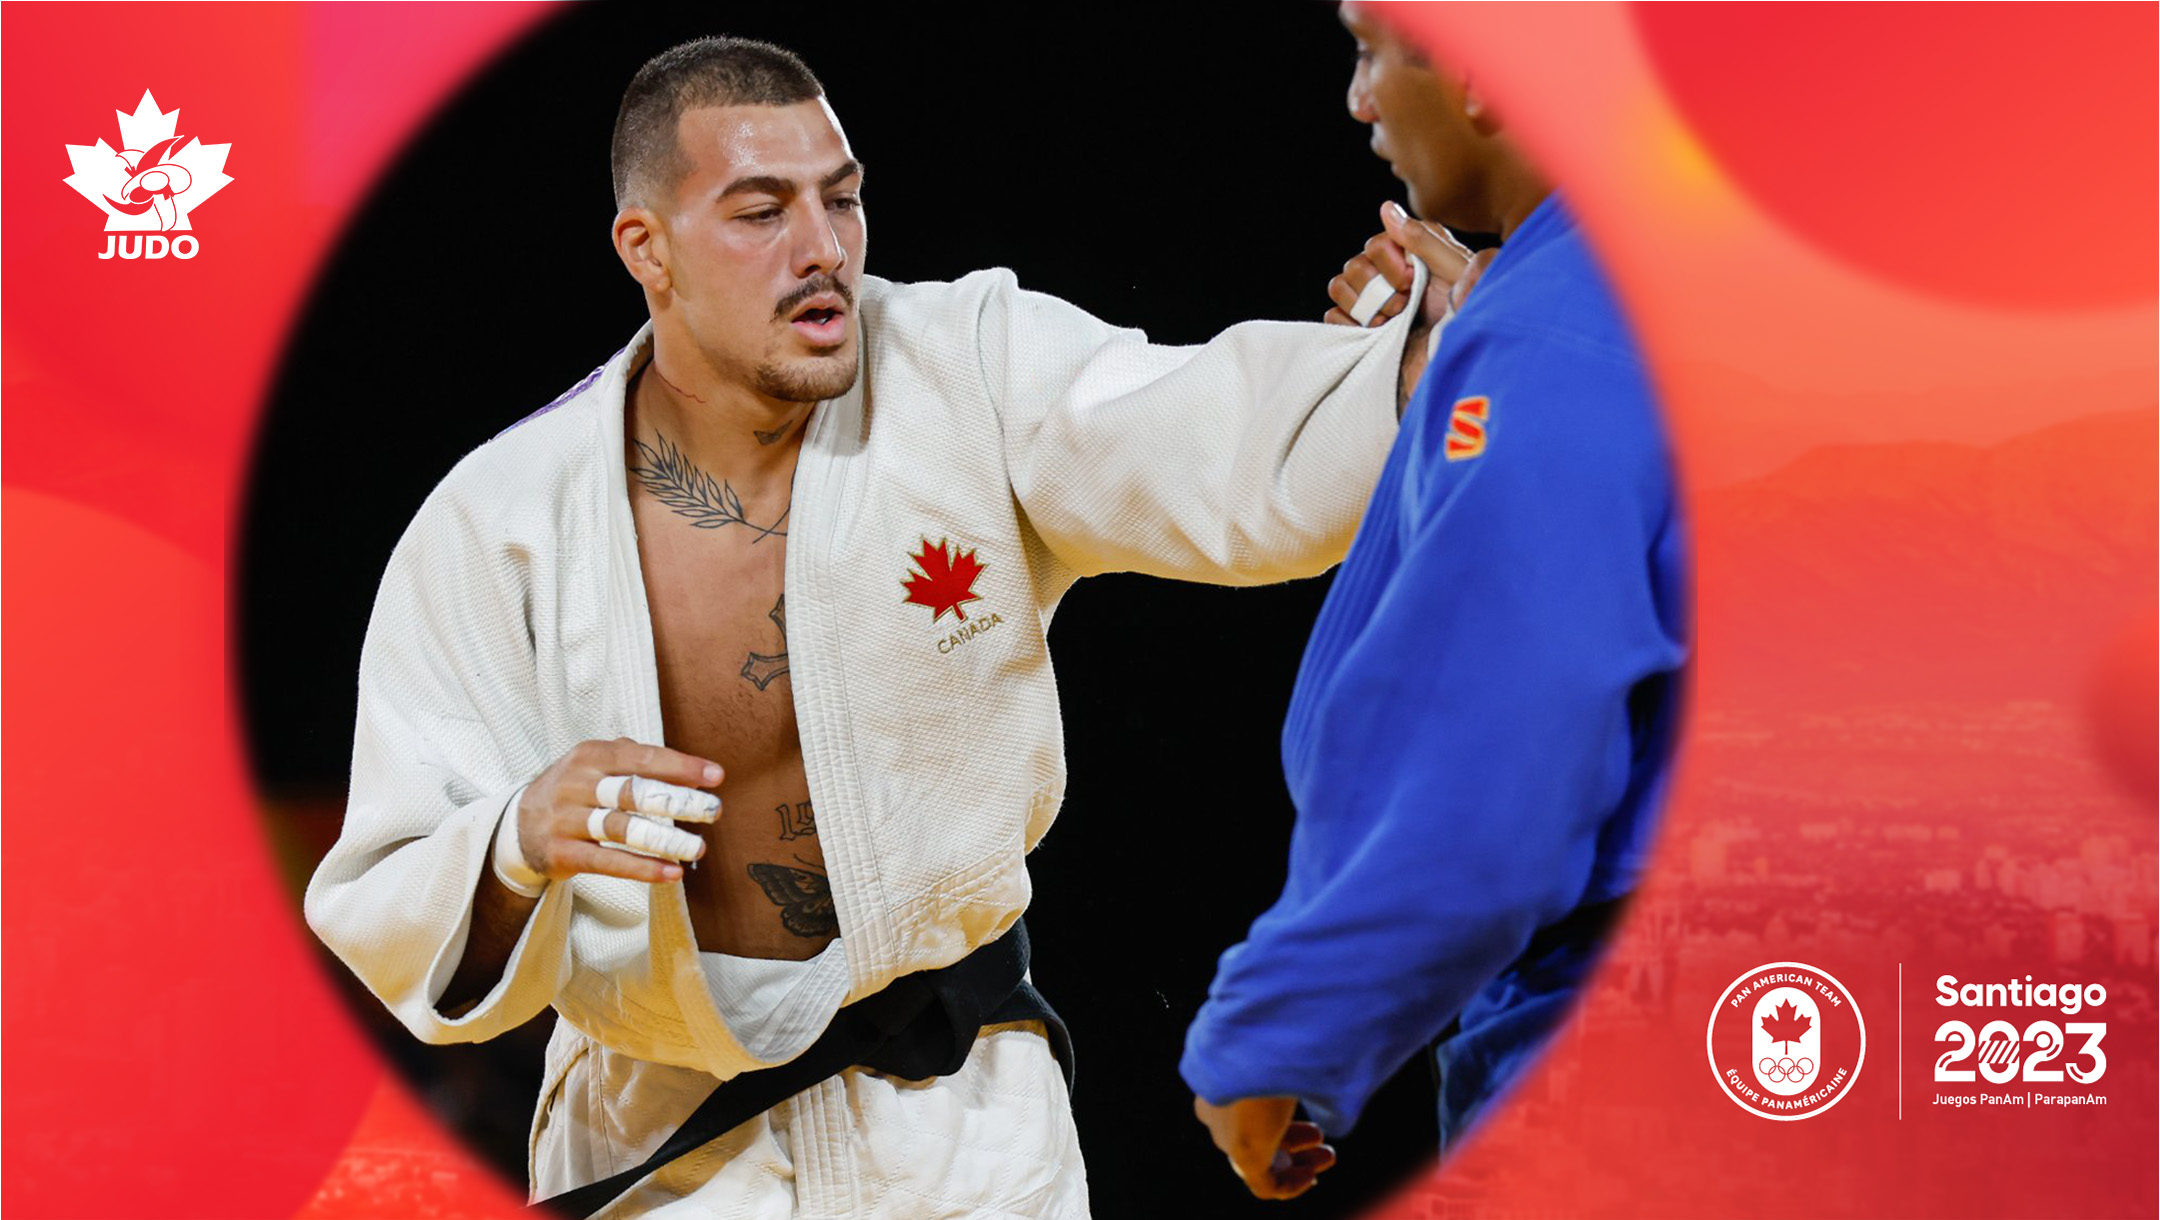 Eight judokas announced for Team Canada for Santiago 2023 – Team Canada